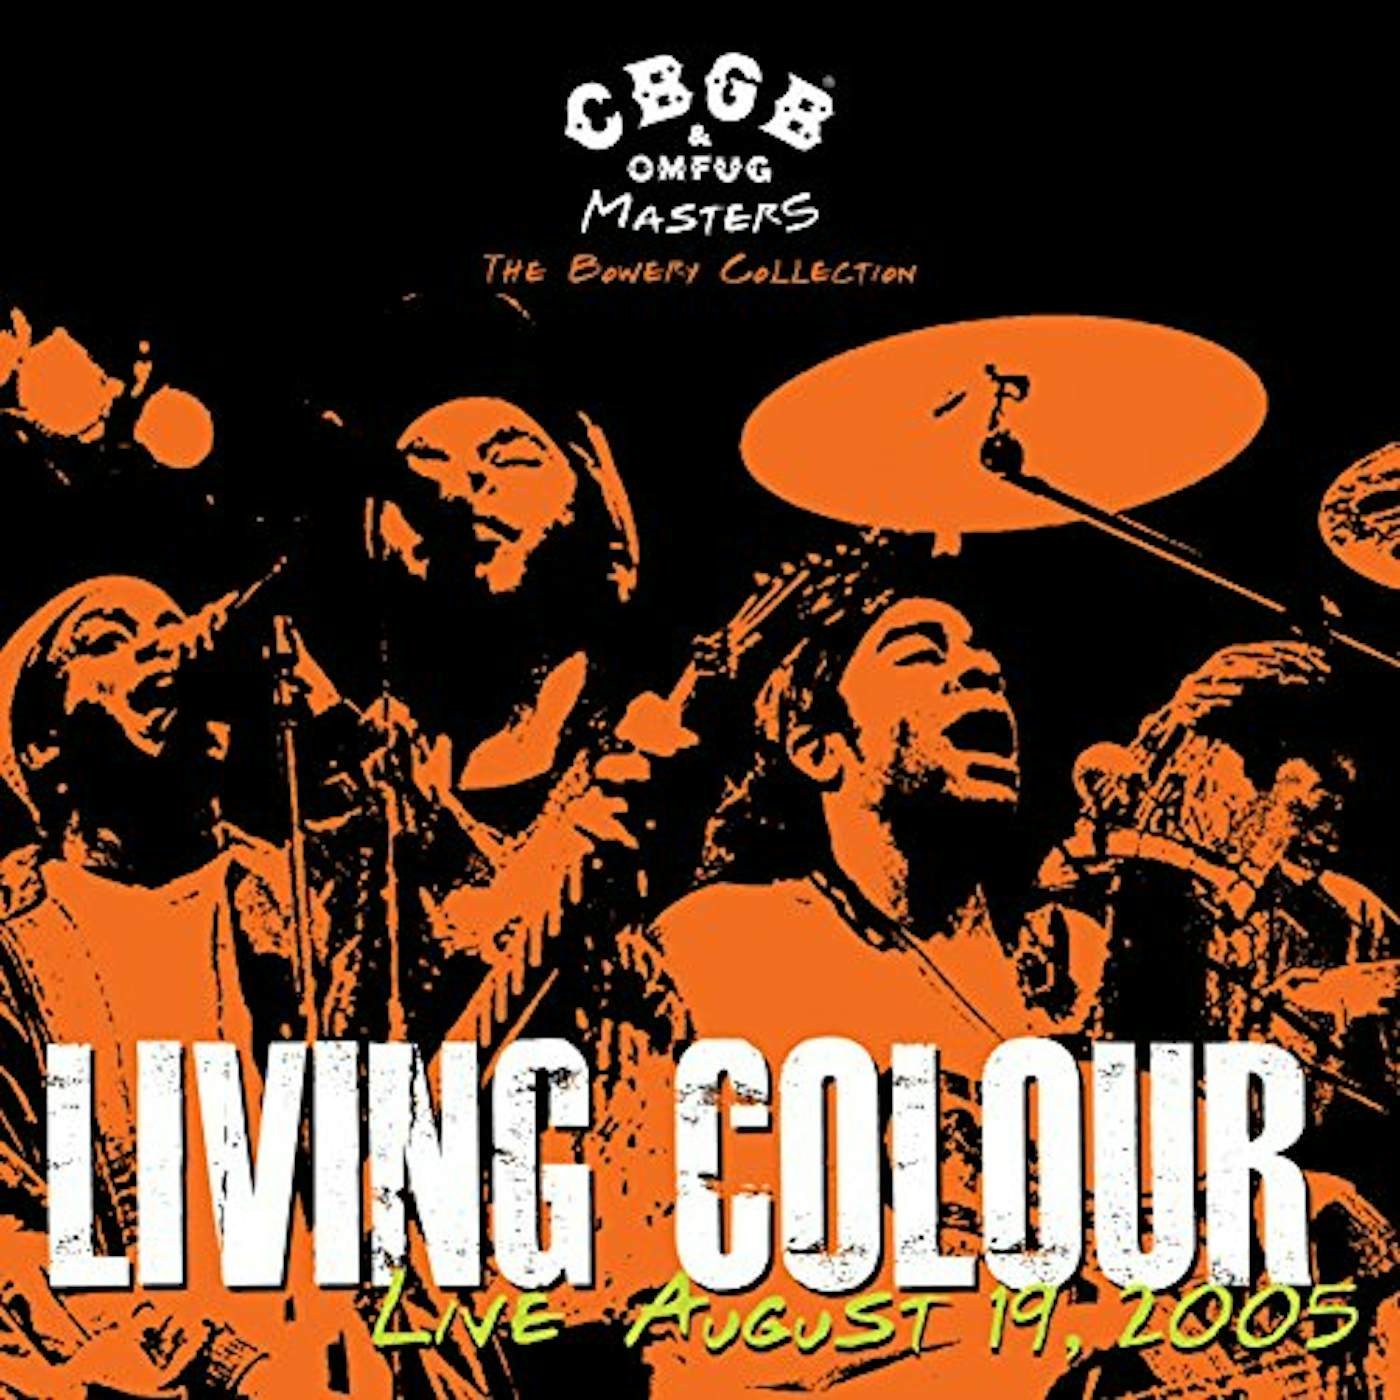 Living Colour CBGB OMFUG MASTERS: AUGUST 19 2005 BOWERY Vinyl Record